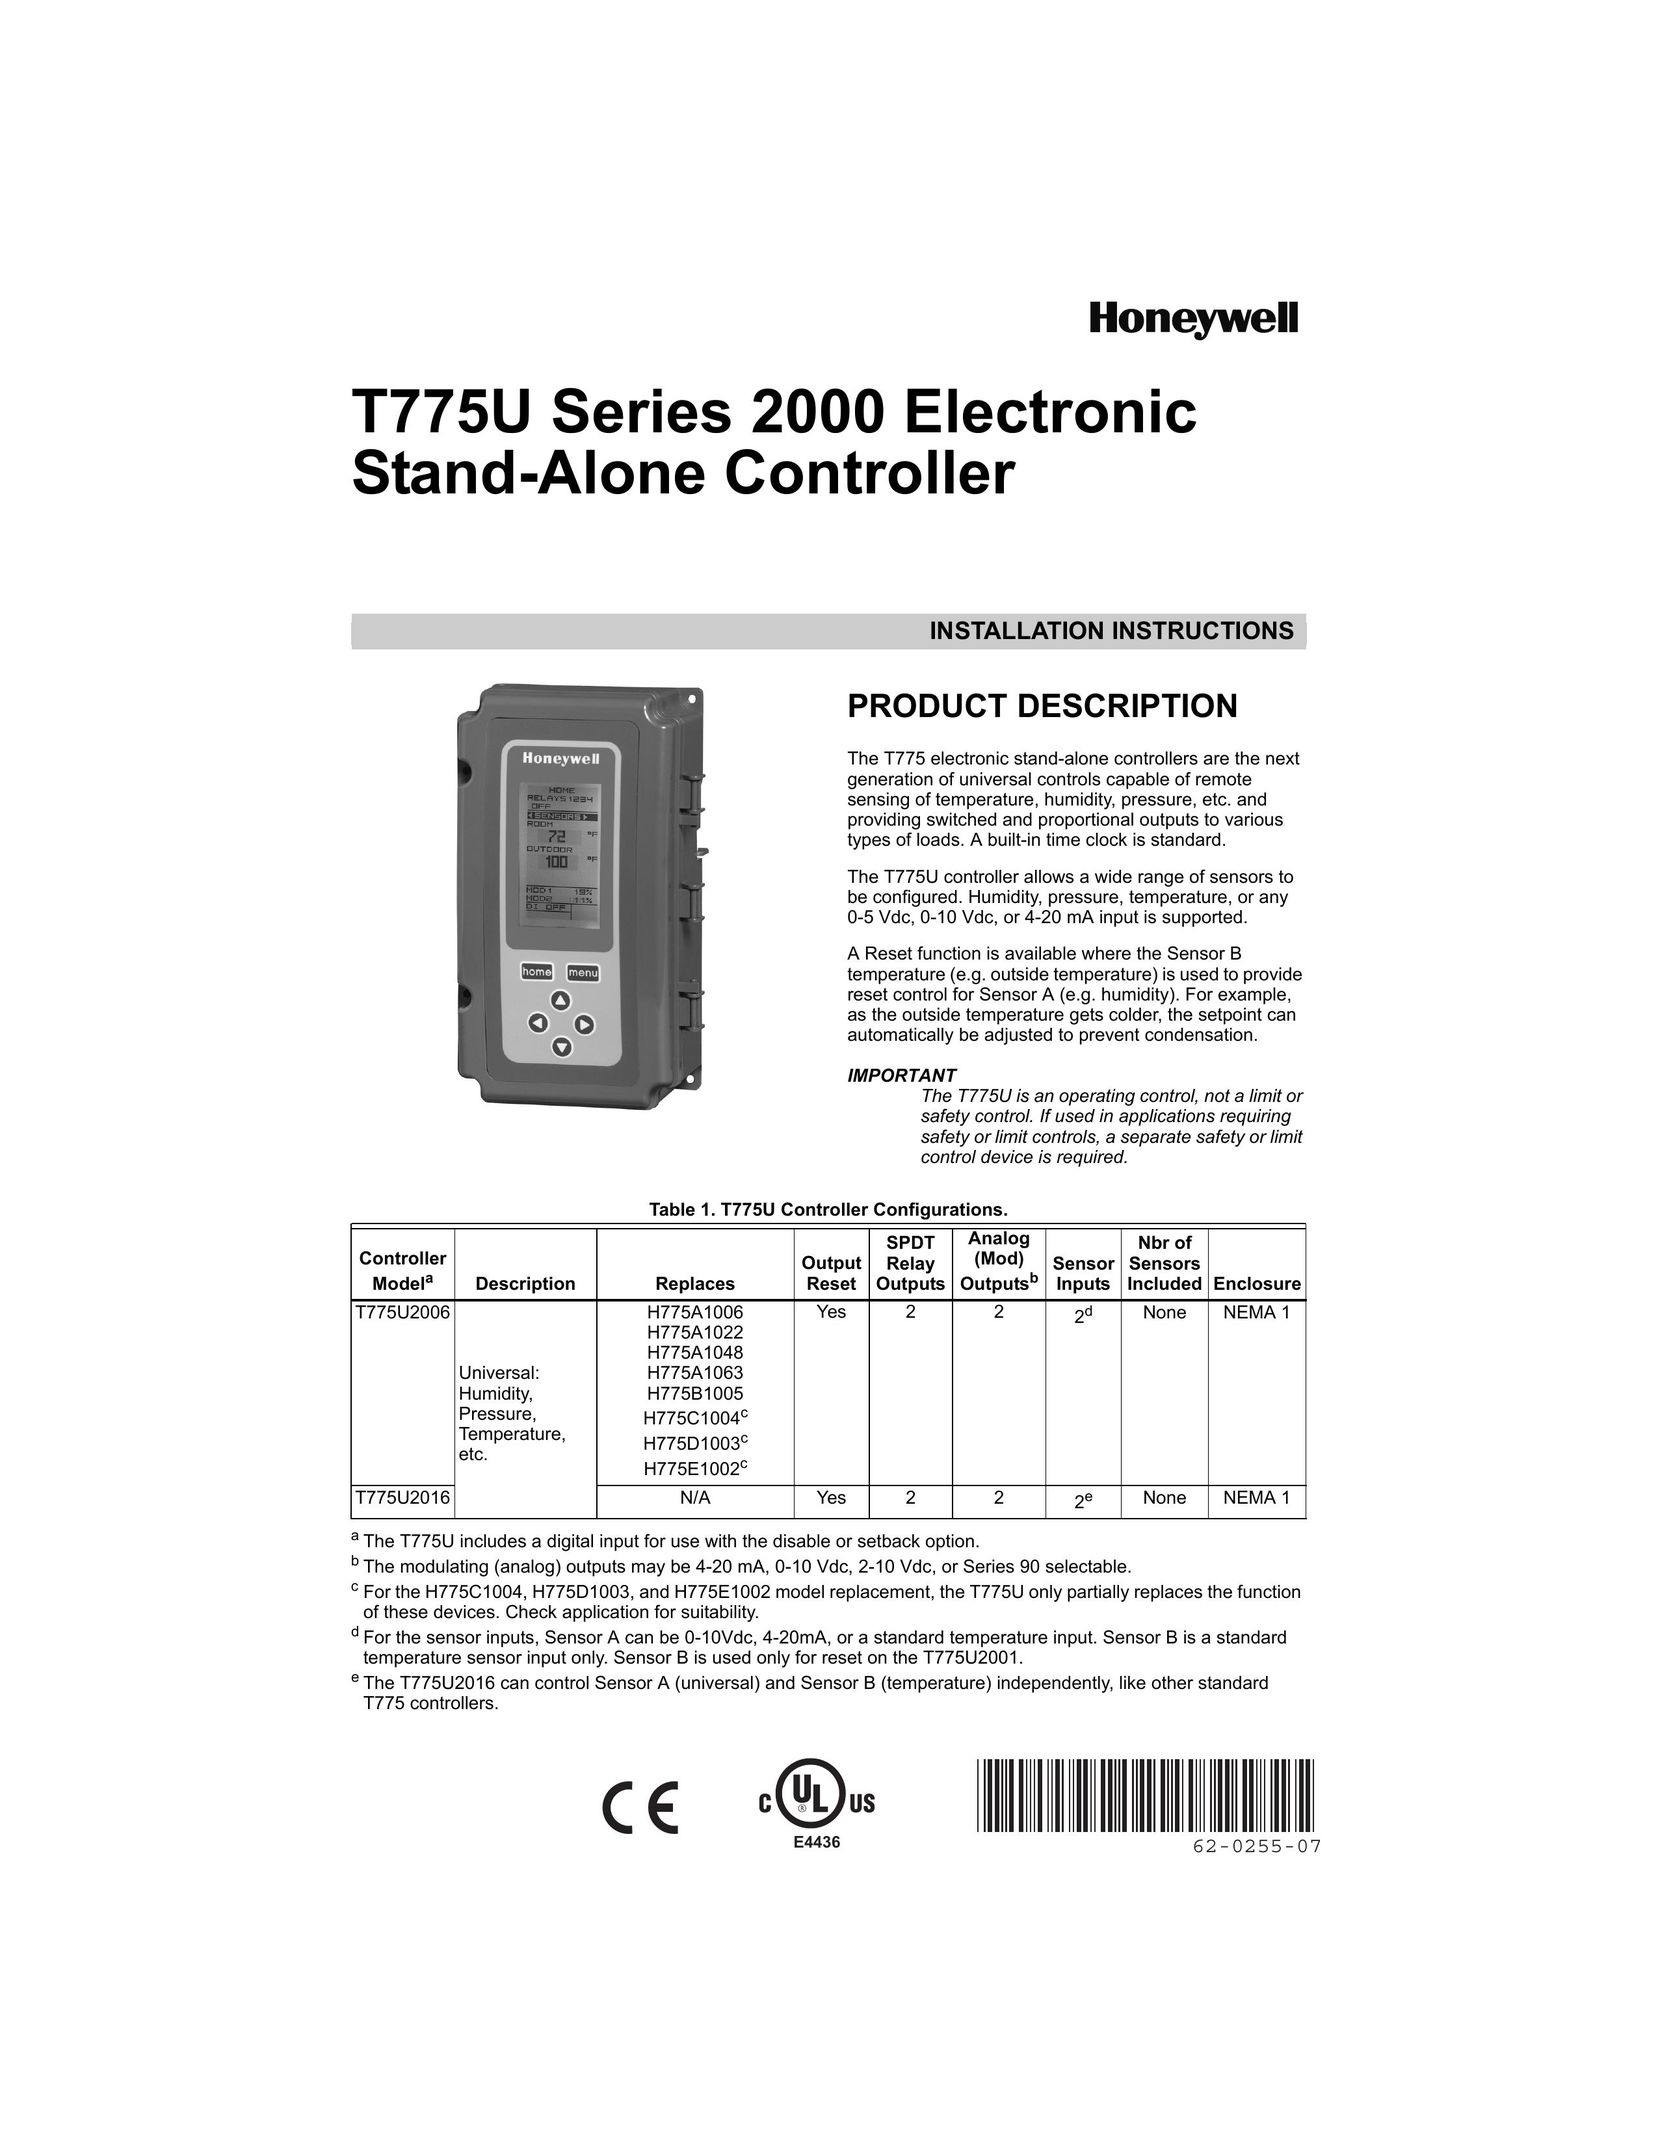 Honeywell T775U Air Conditioner User Manual